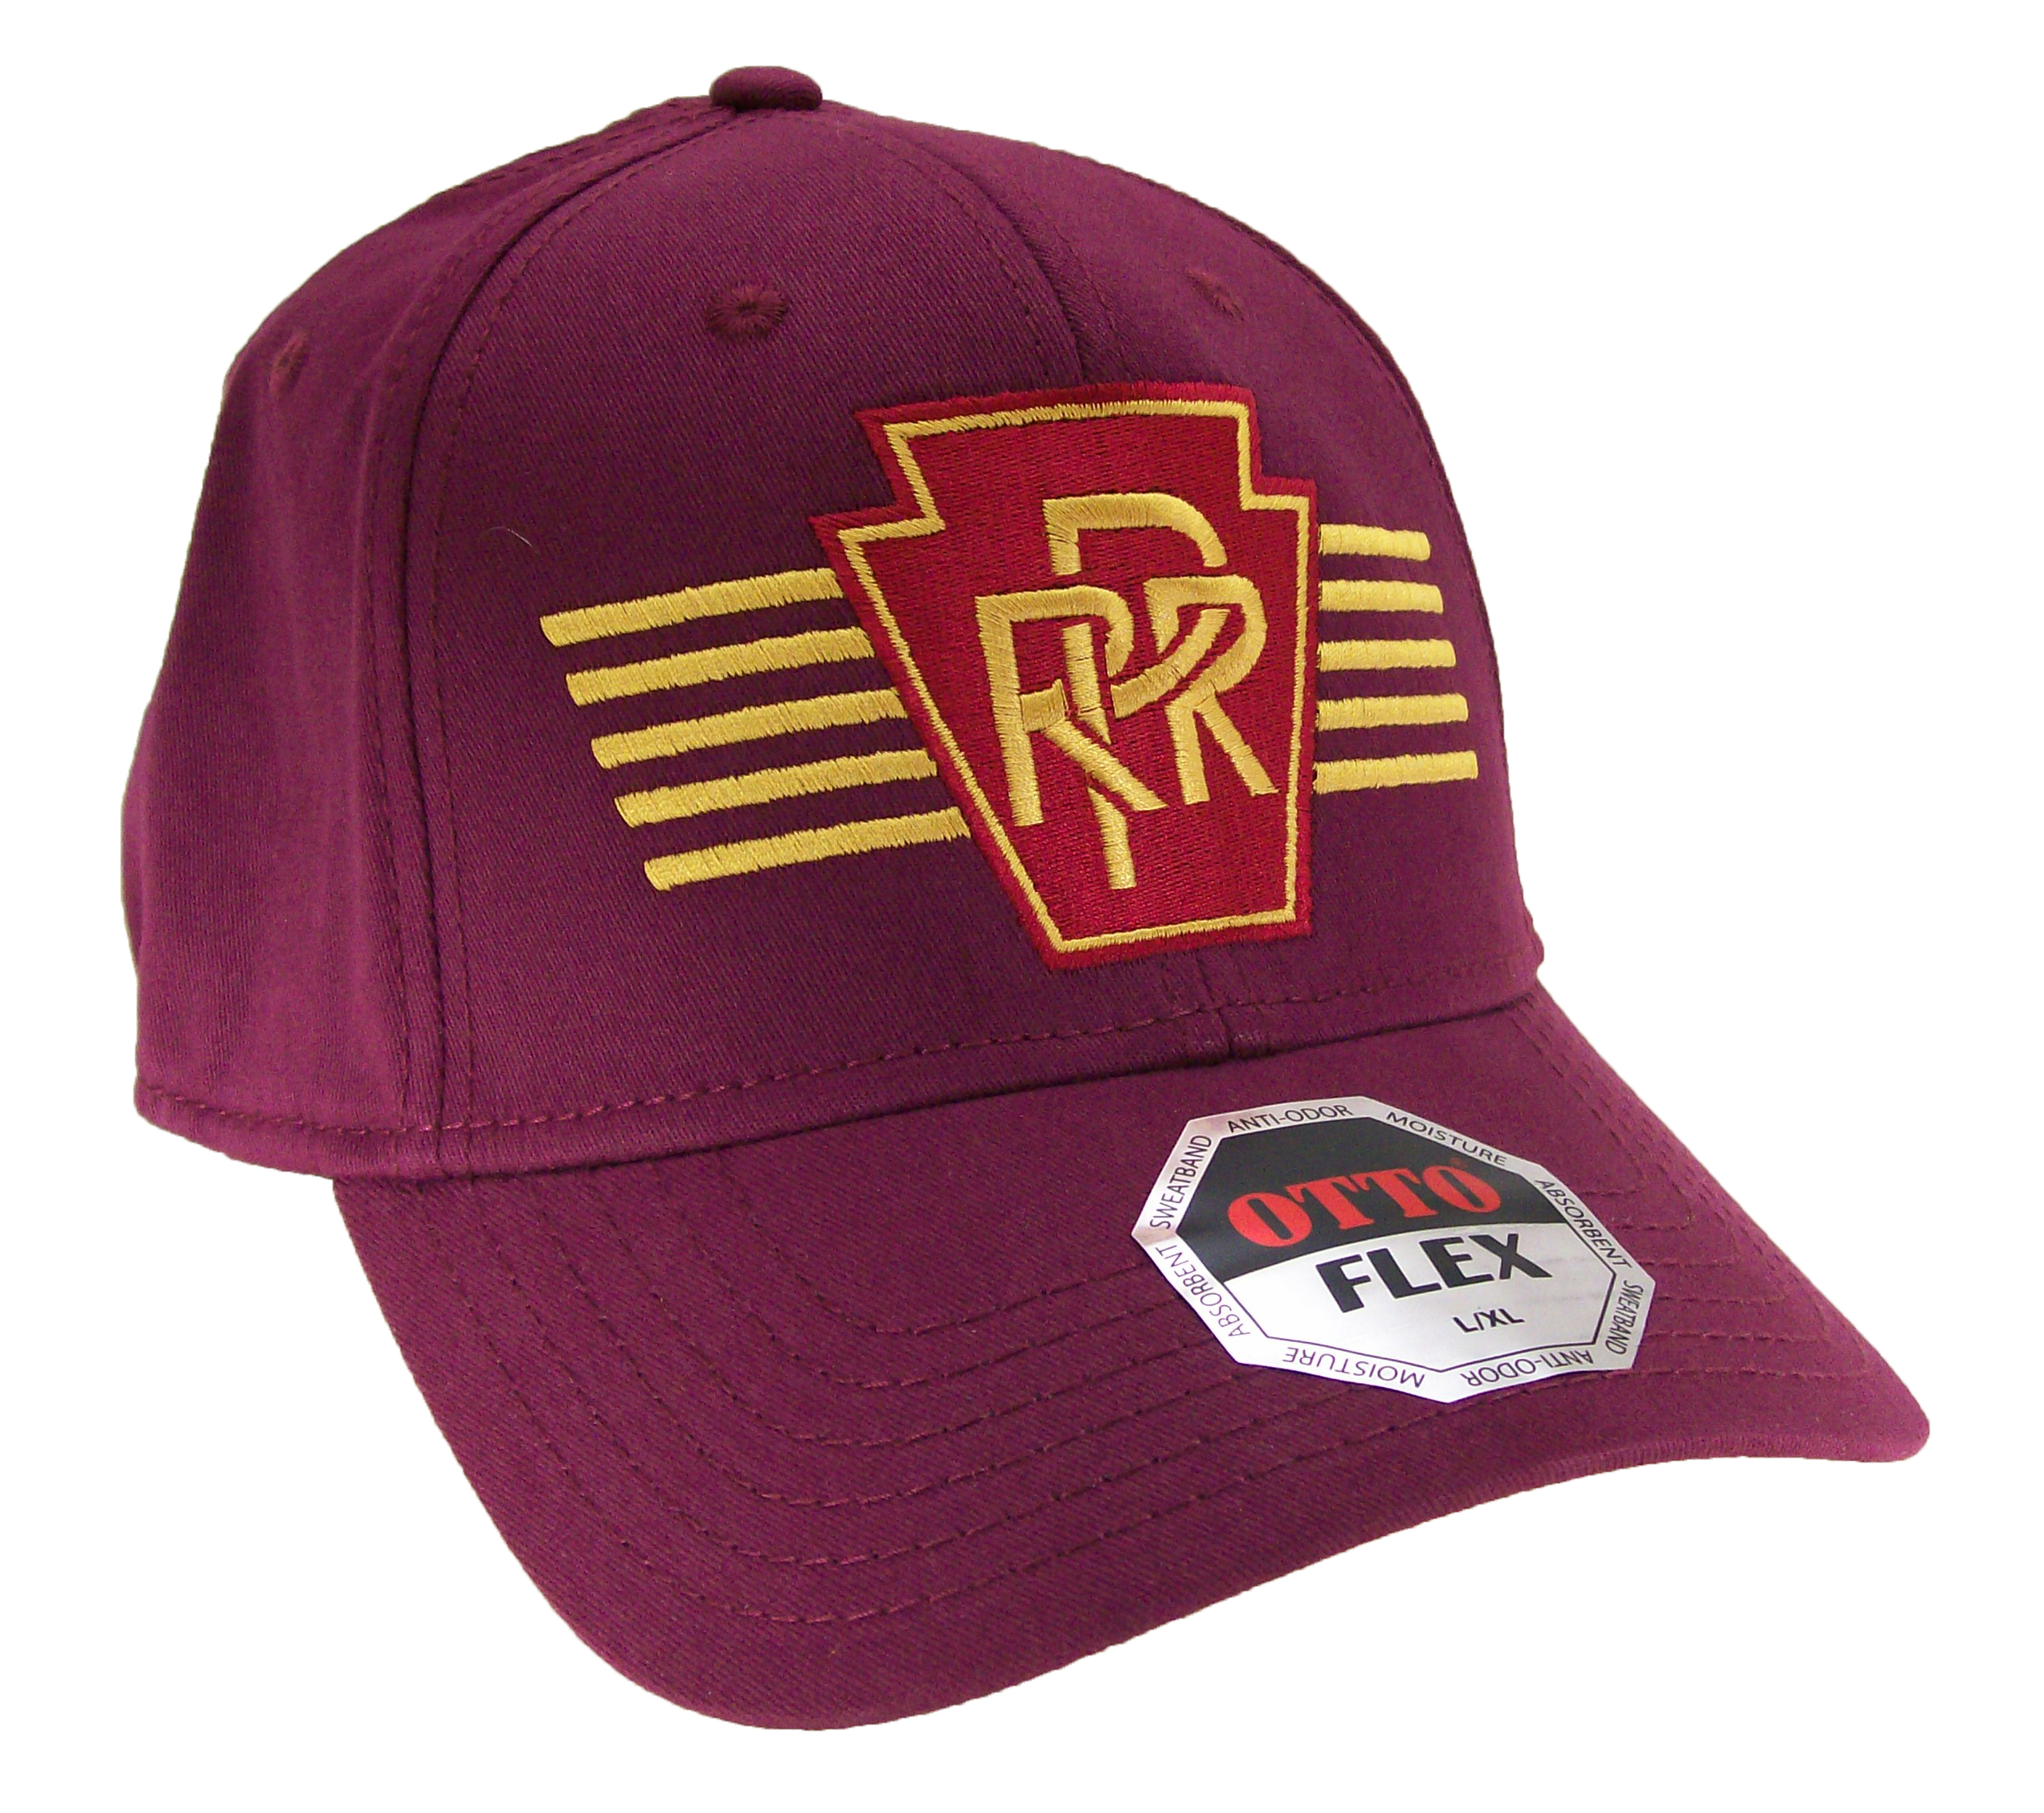 Pennsylvania Railroad Embroidered Flex Fit Cap Hat #40-1009FF CHOOSE COLOR/SIZE  - Locomotive Logos